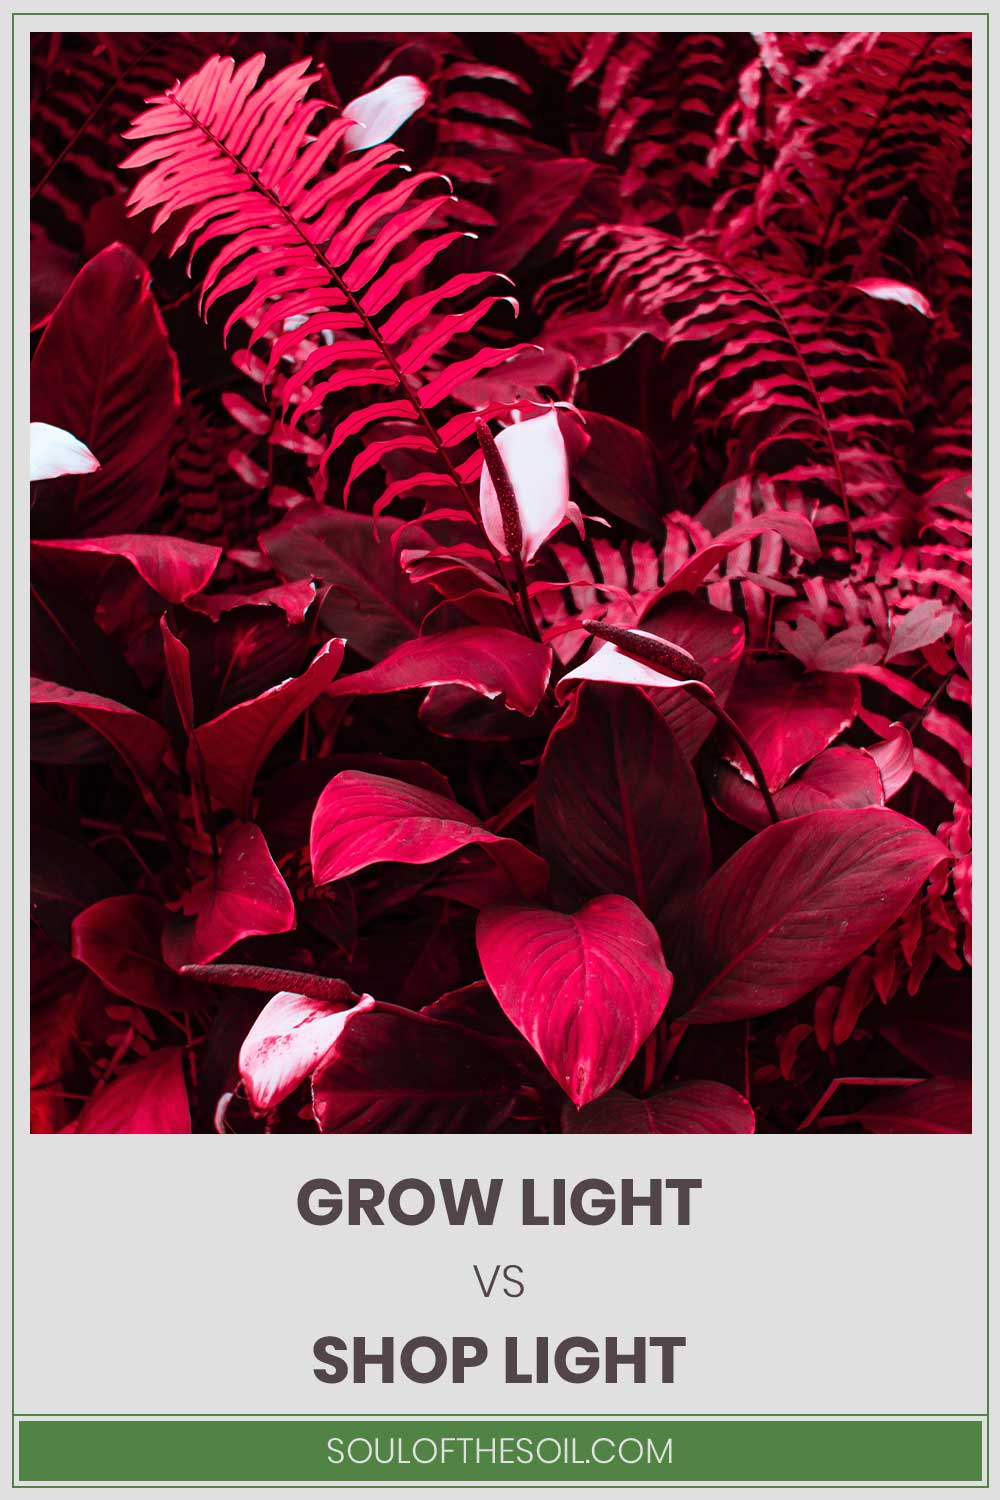 Red light making plants look red - Grow Light vs. Shop Light.